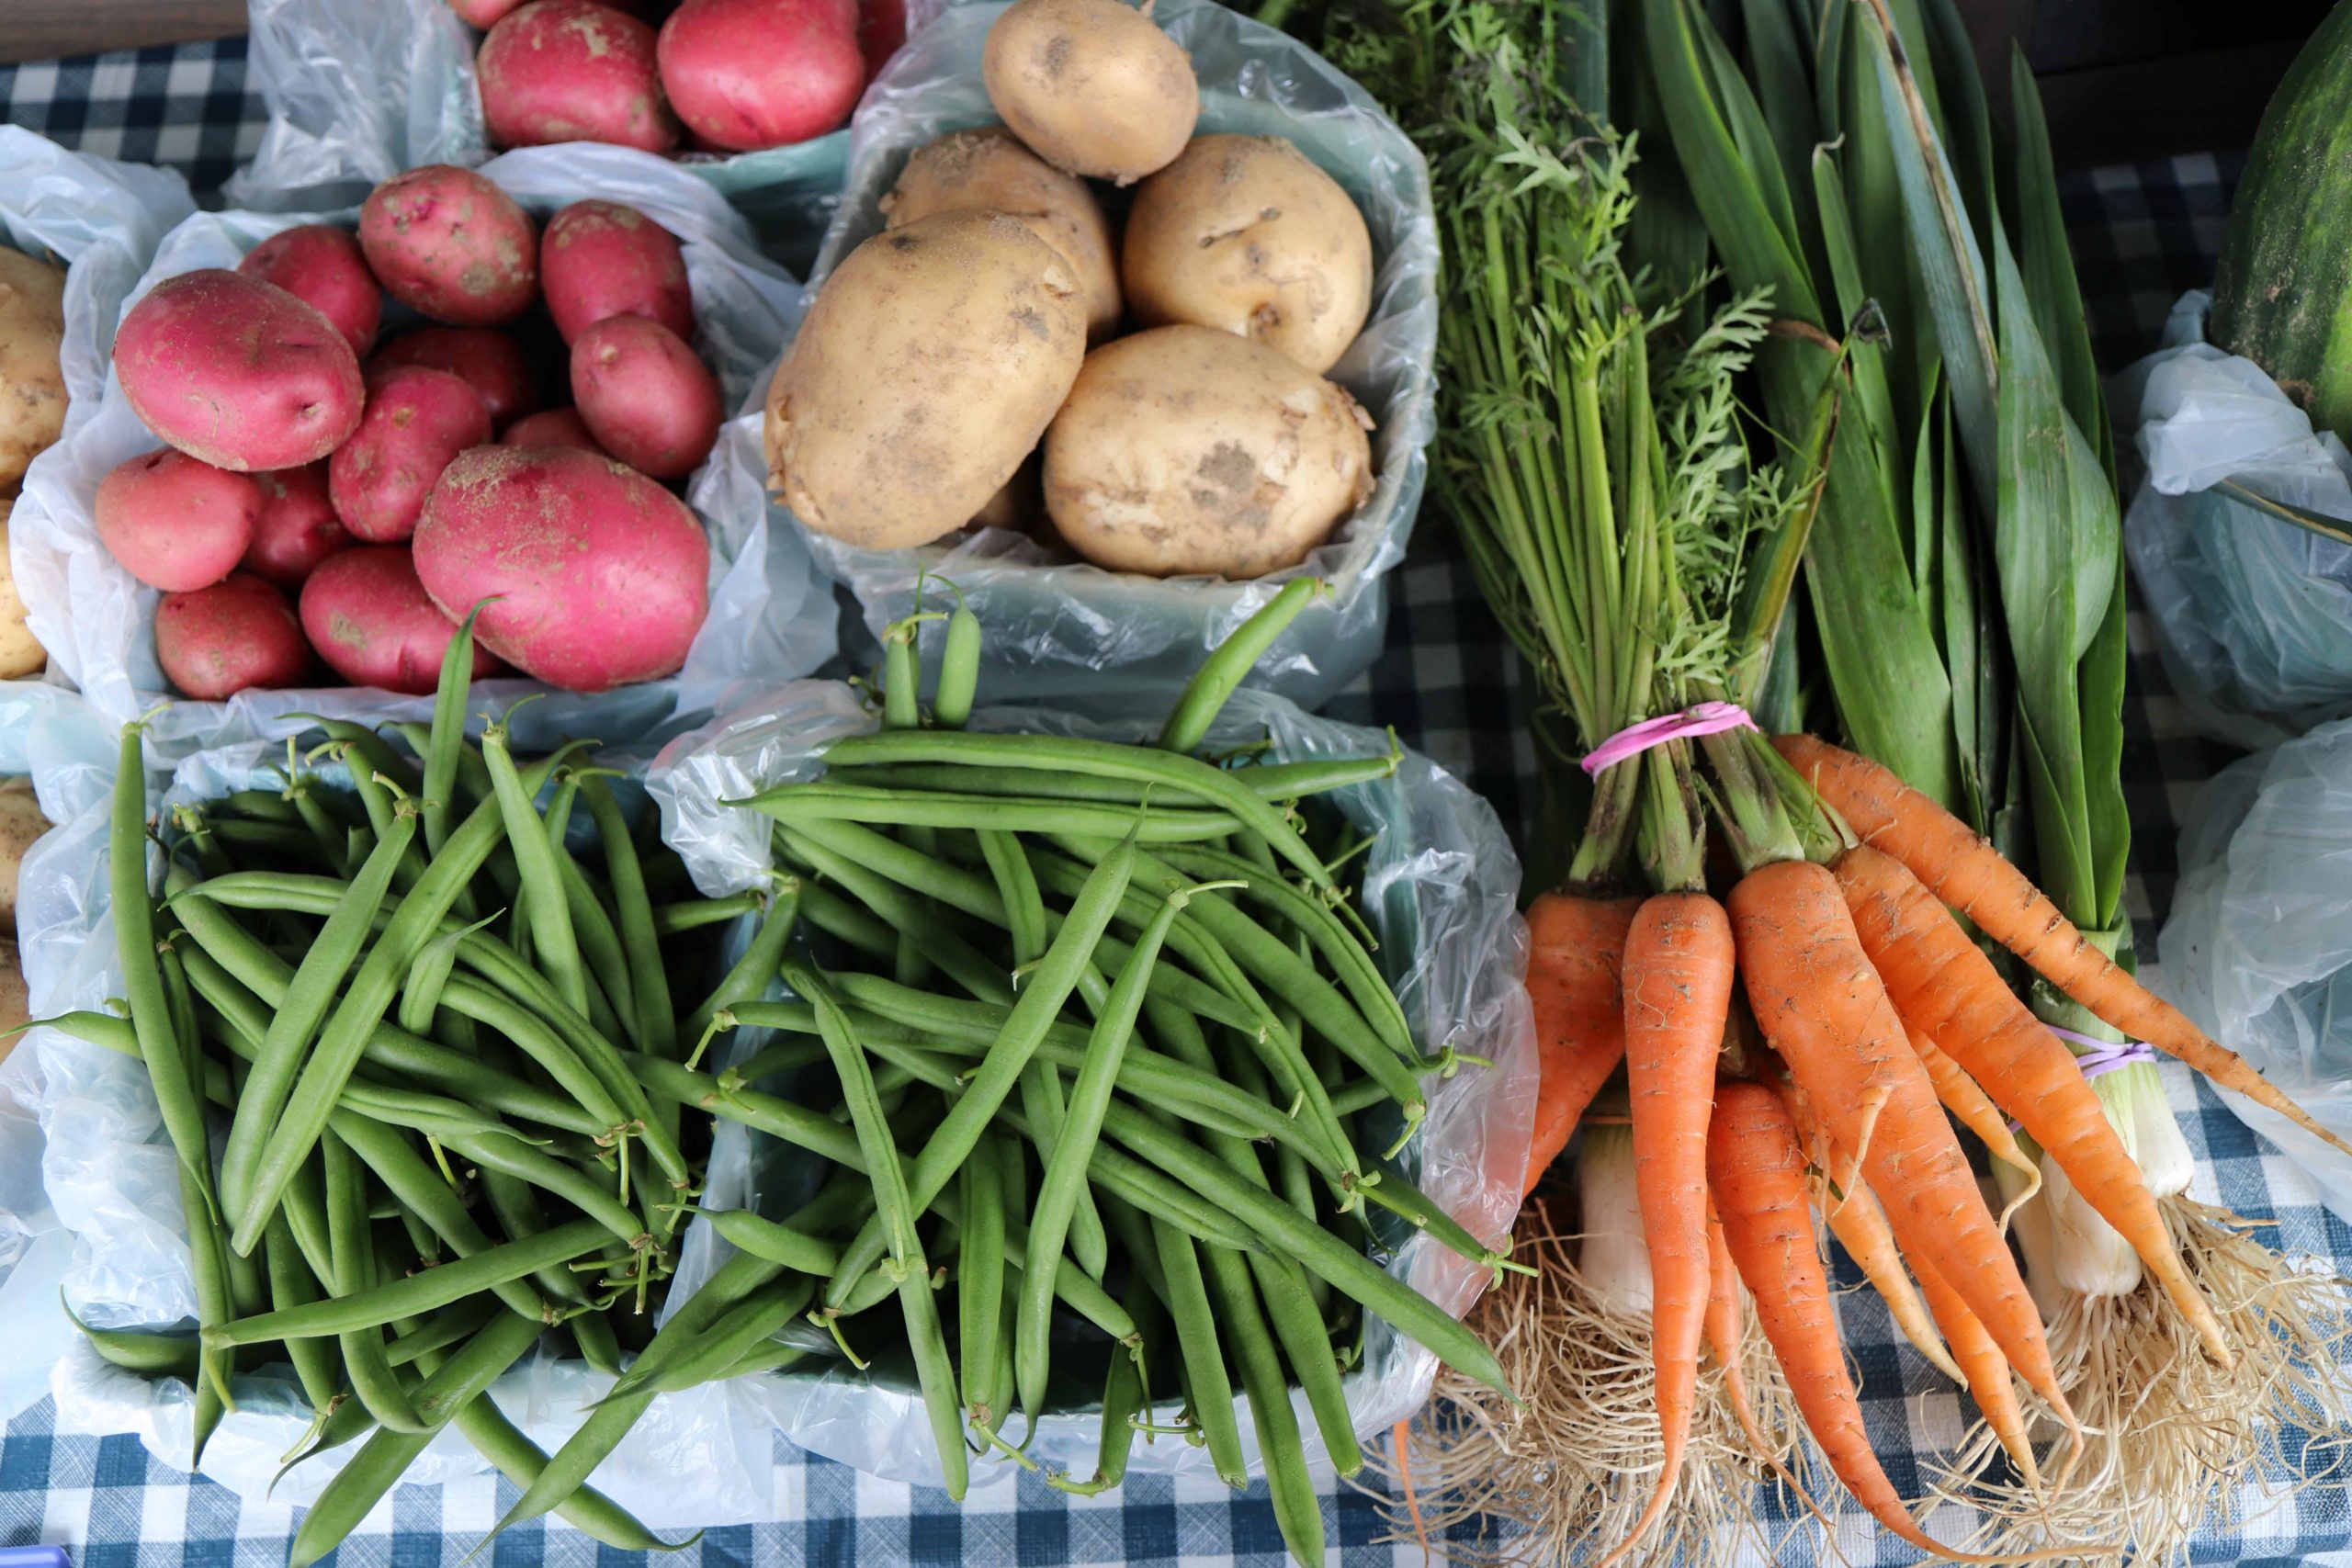 Downtown Trenton Front Street Farmers’ Market to open next weekend